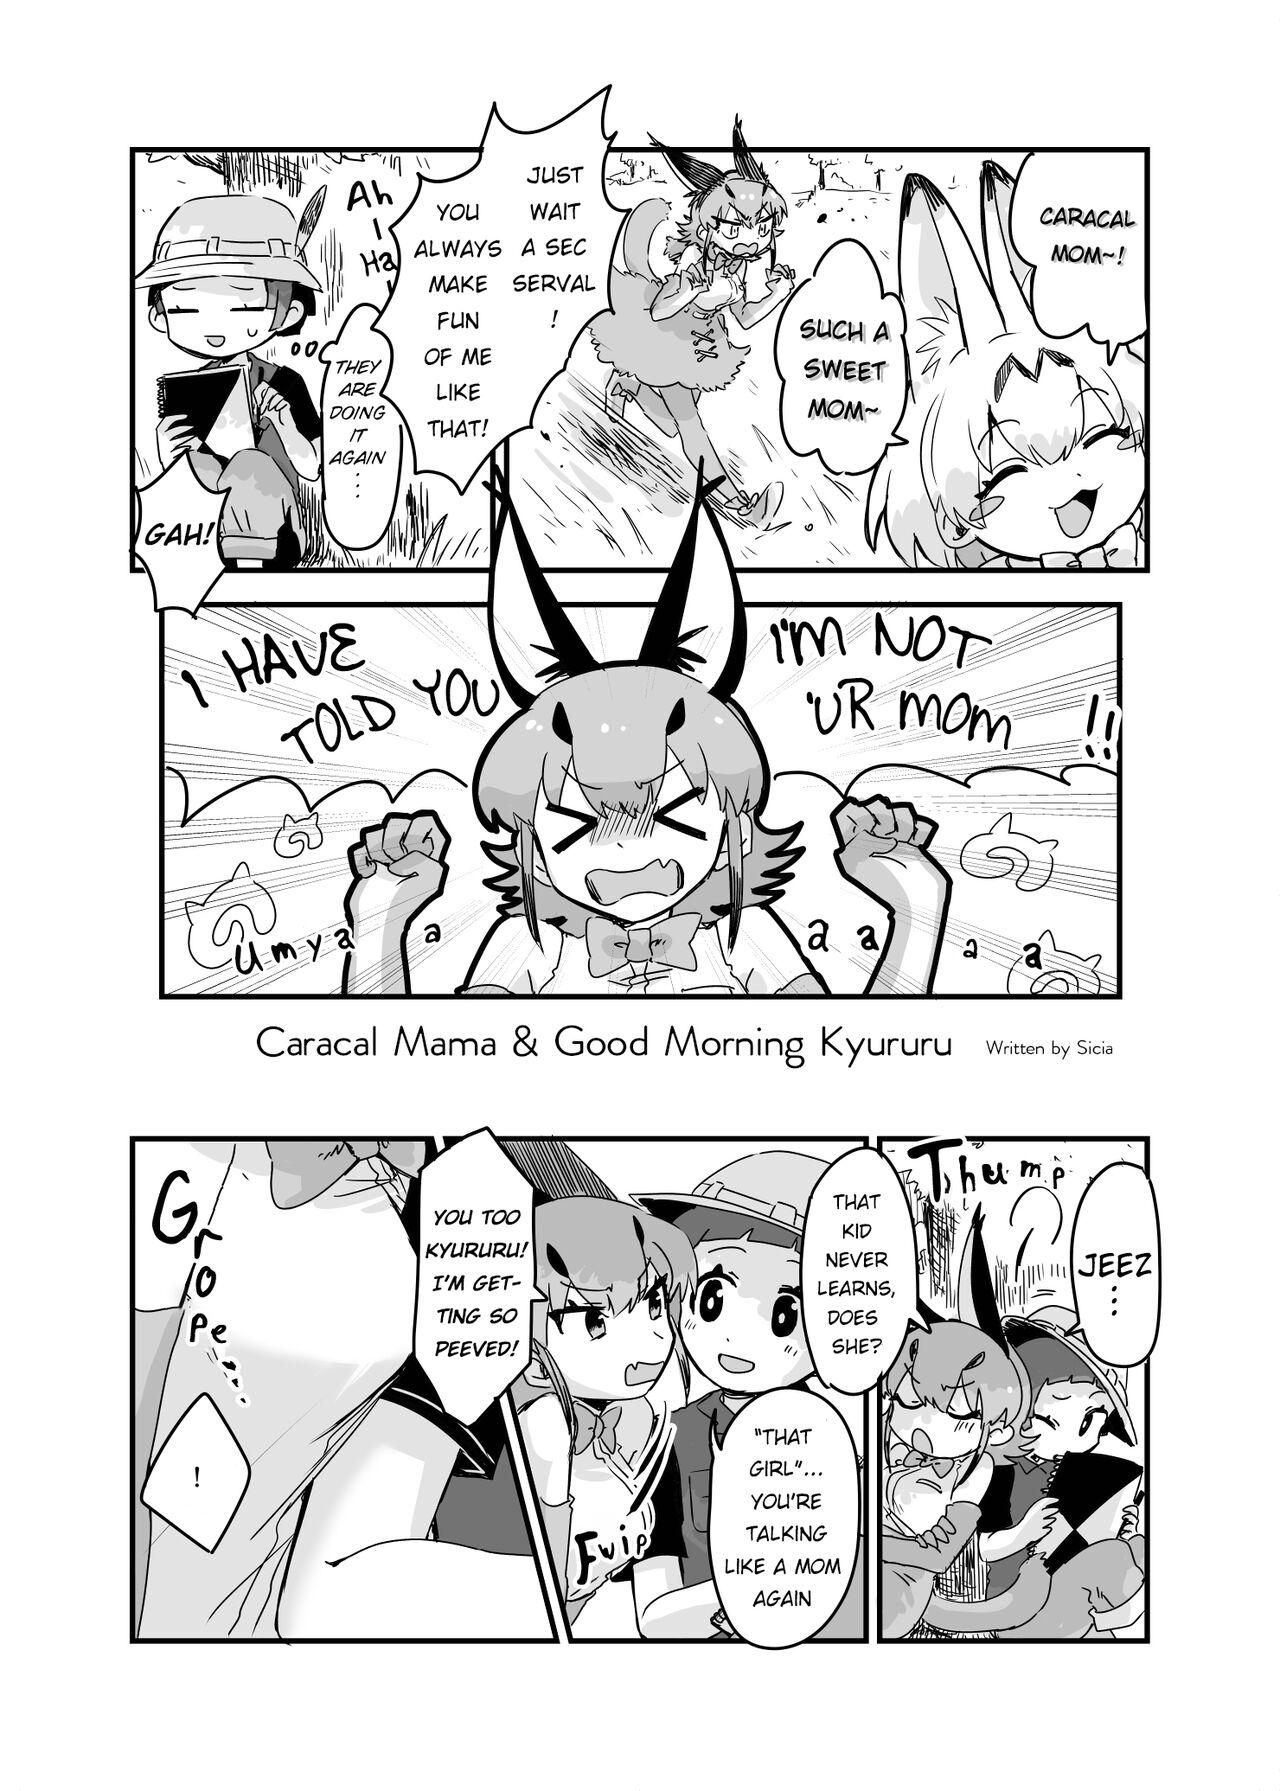 Caracal Mama & Good Morning Kyururu 0